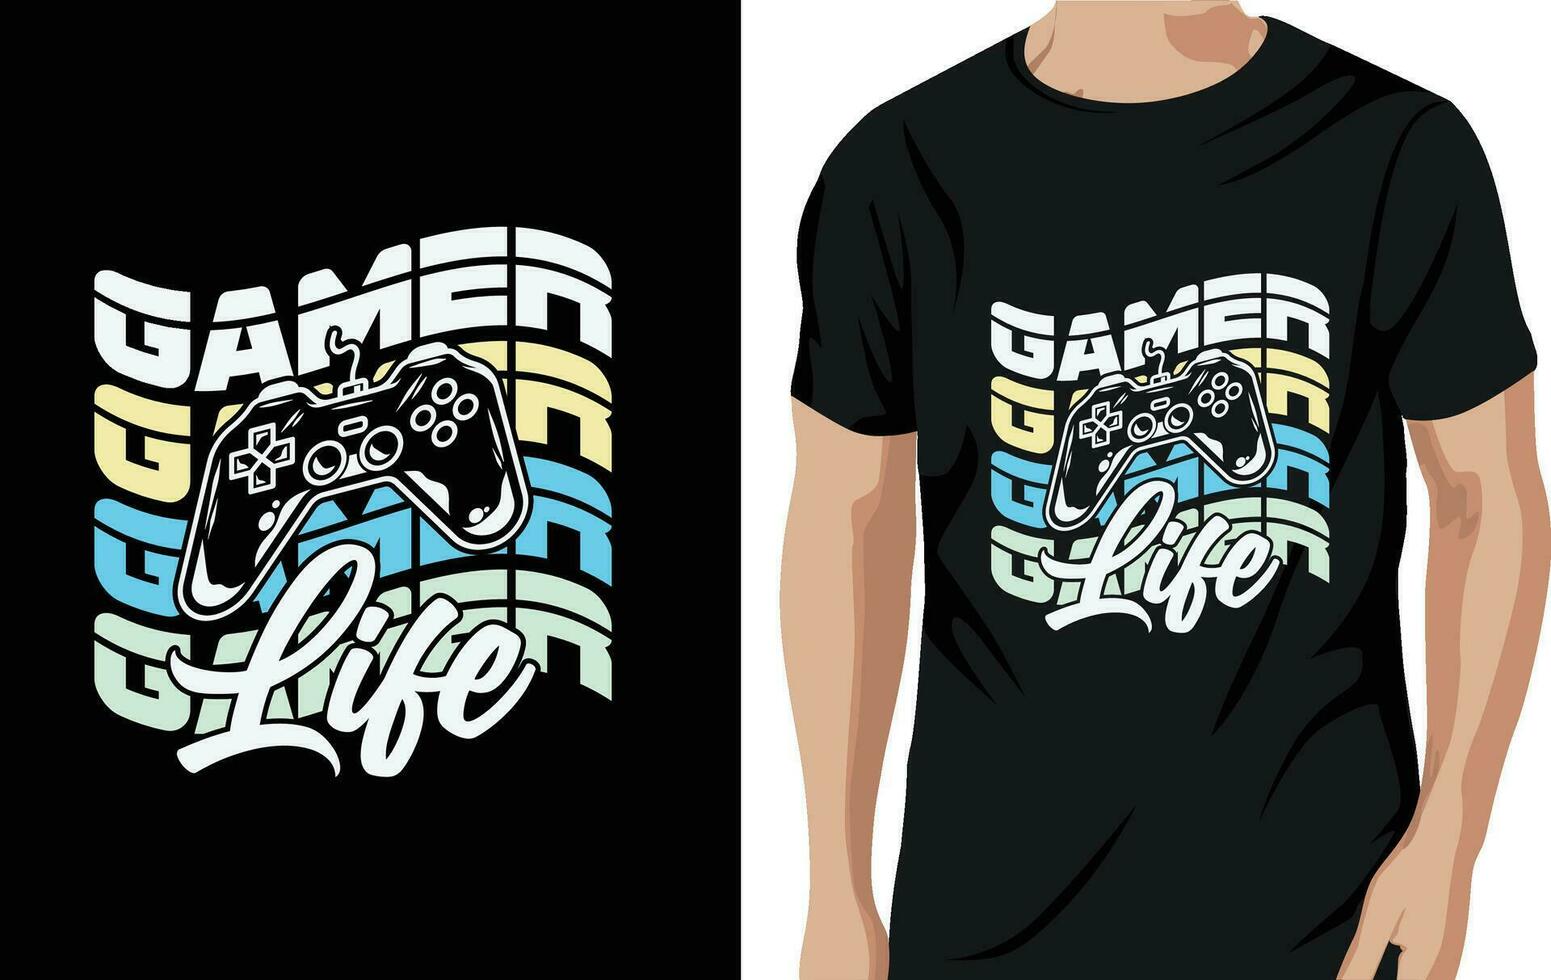 gaming t-shirt ontwerp vector